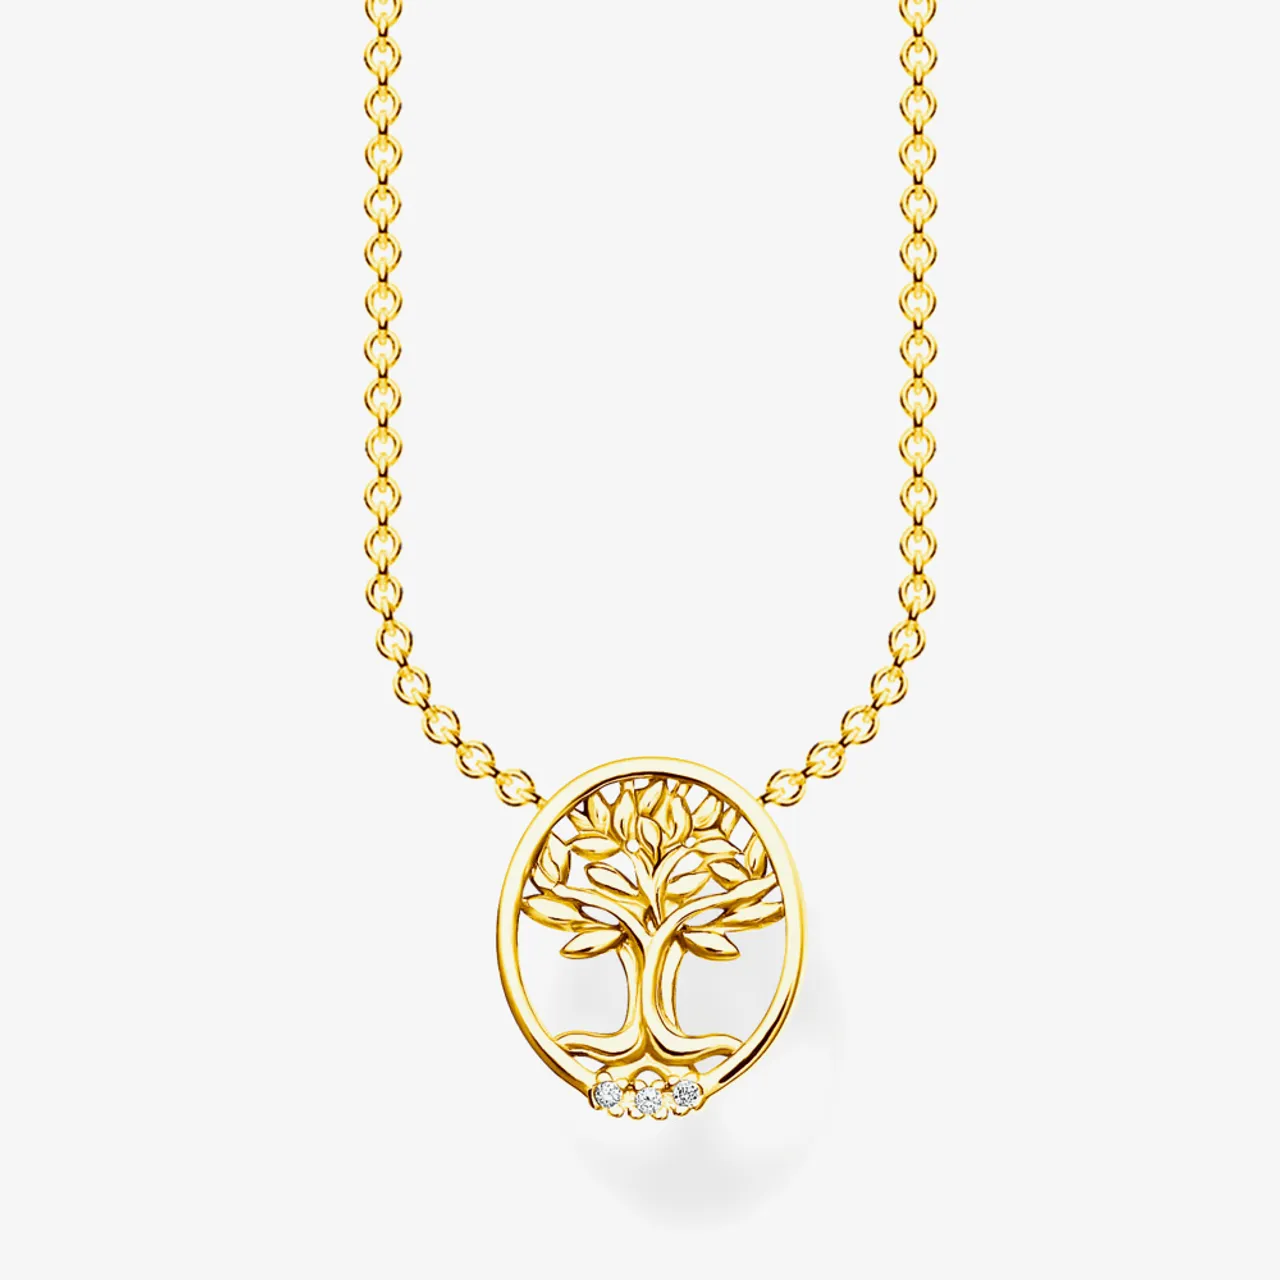 THOMAS SABO 18ct Gold Plated & Cubic Zirconia Tree of Life Necklace KE2126-414-14-L45V